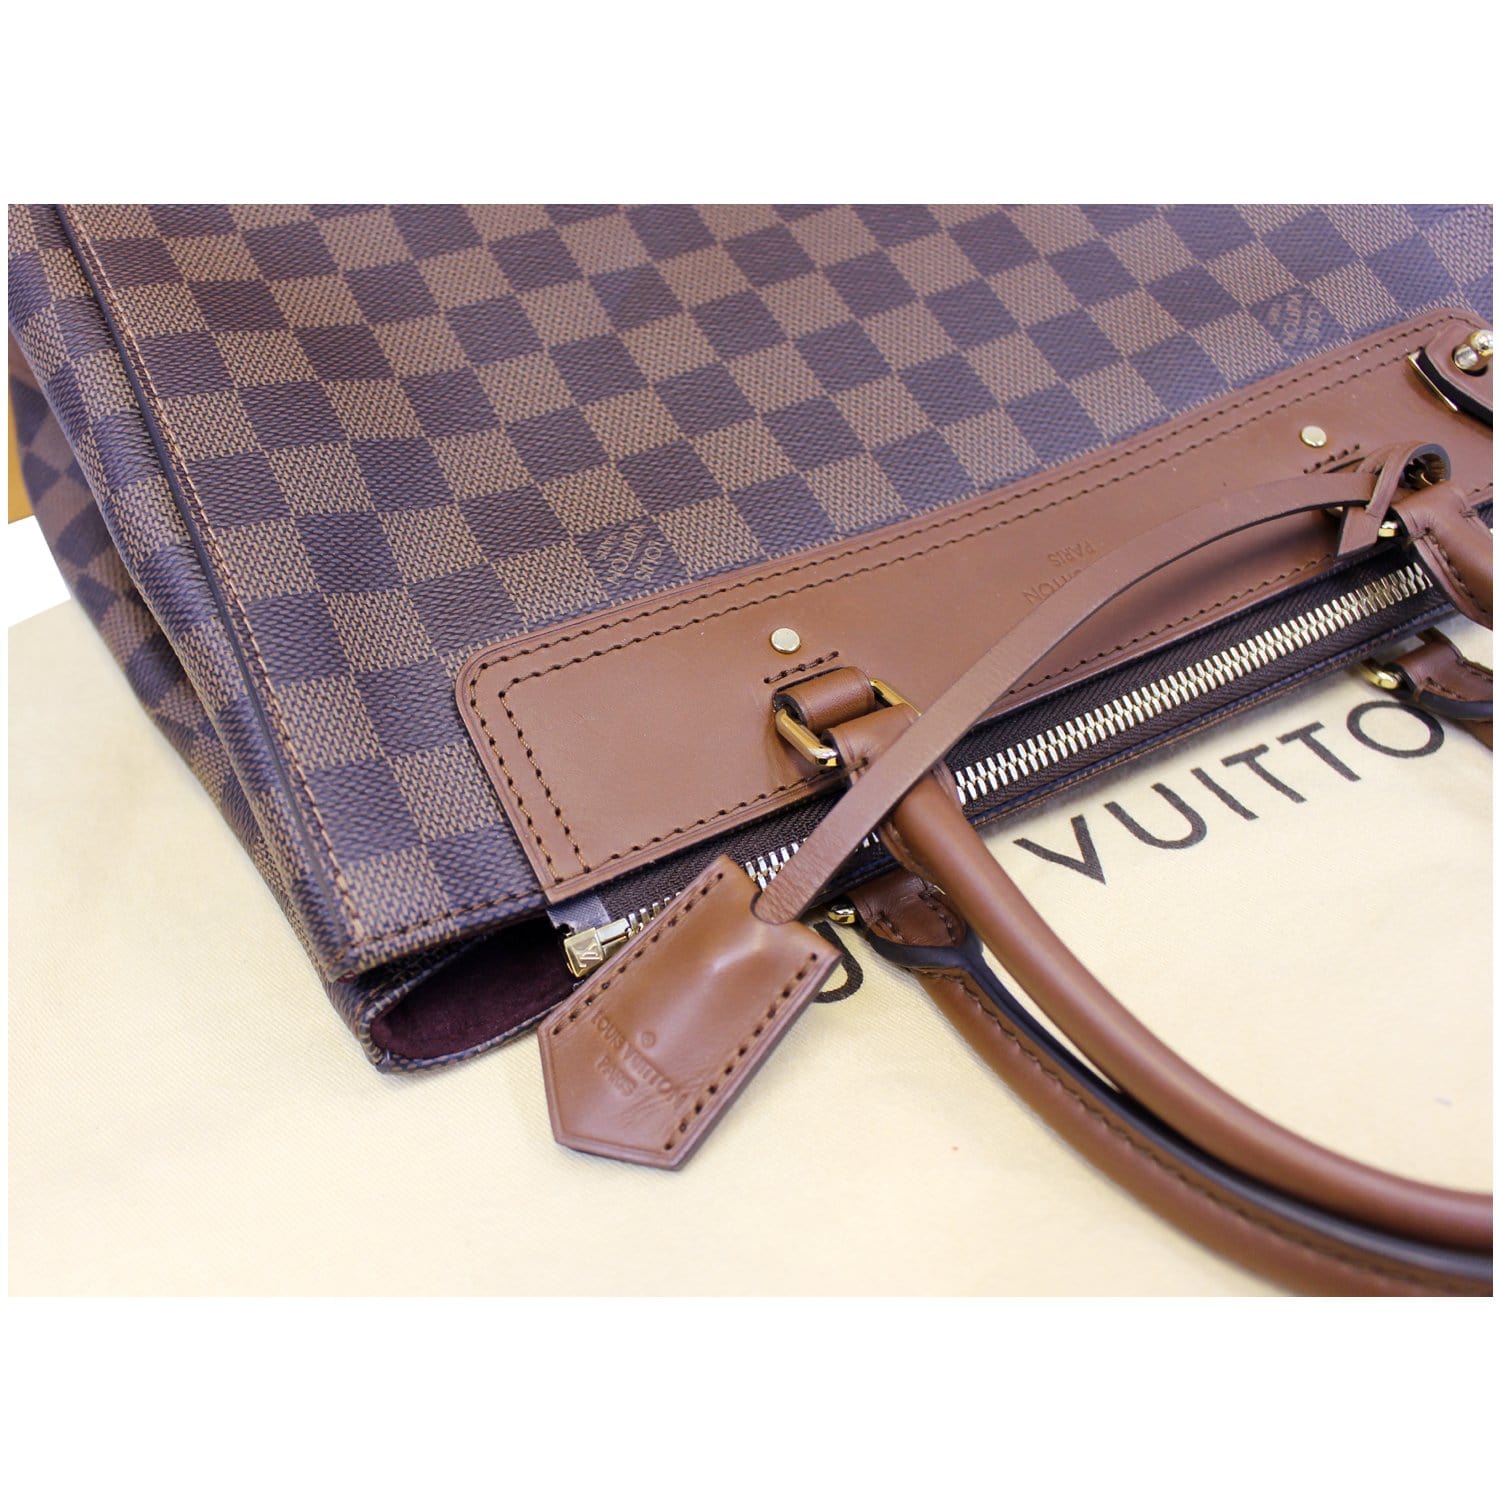 Louis Vuitton Neo Greenwich Handbag Damier Graphite Black 523231